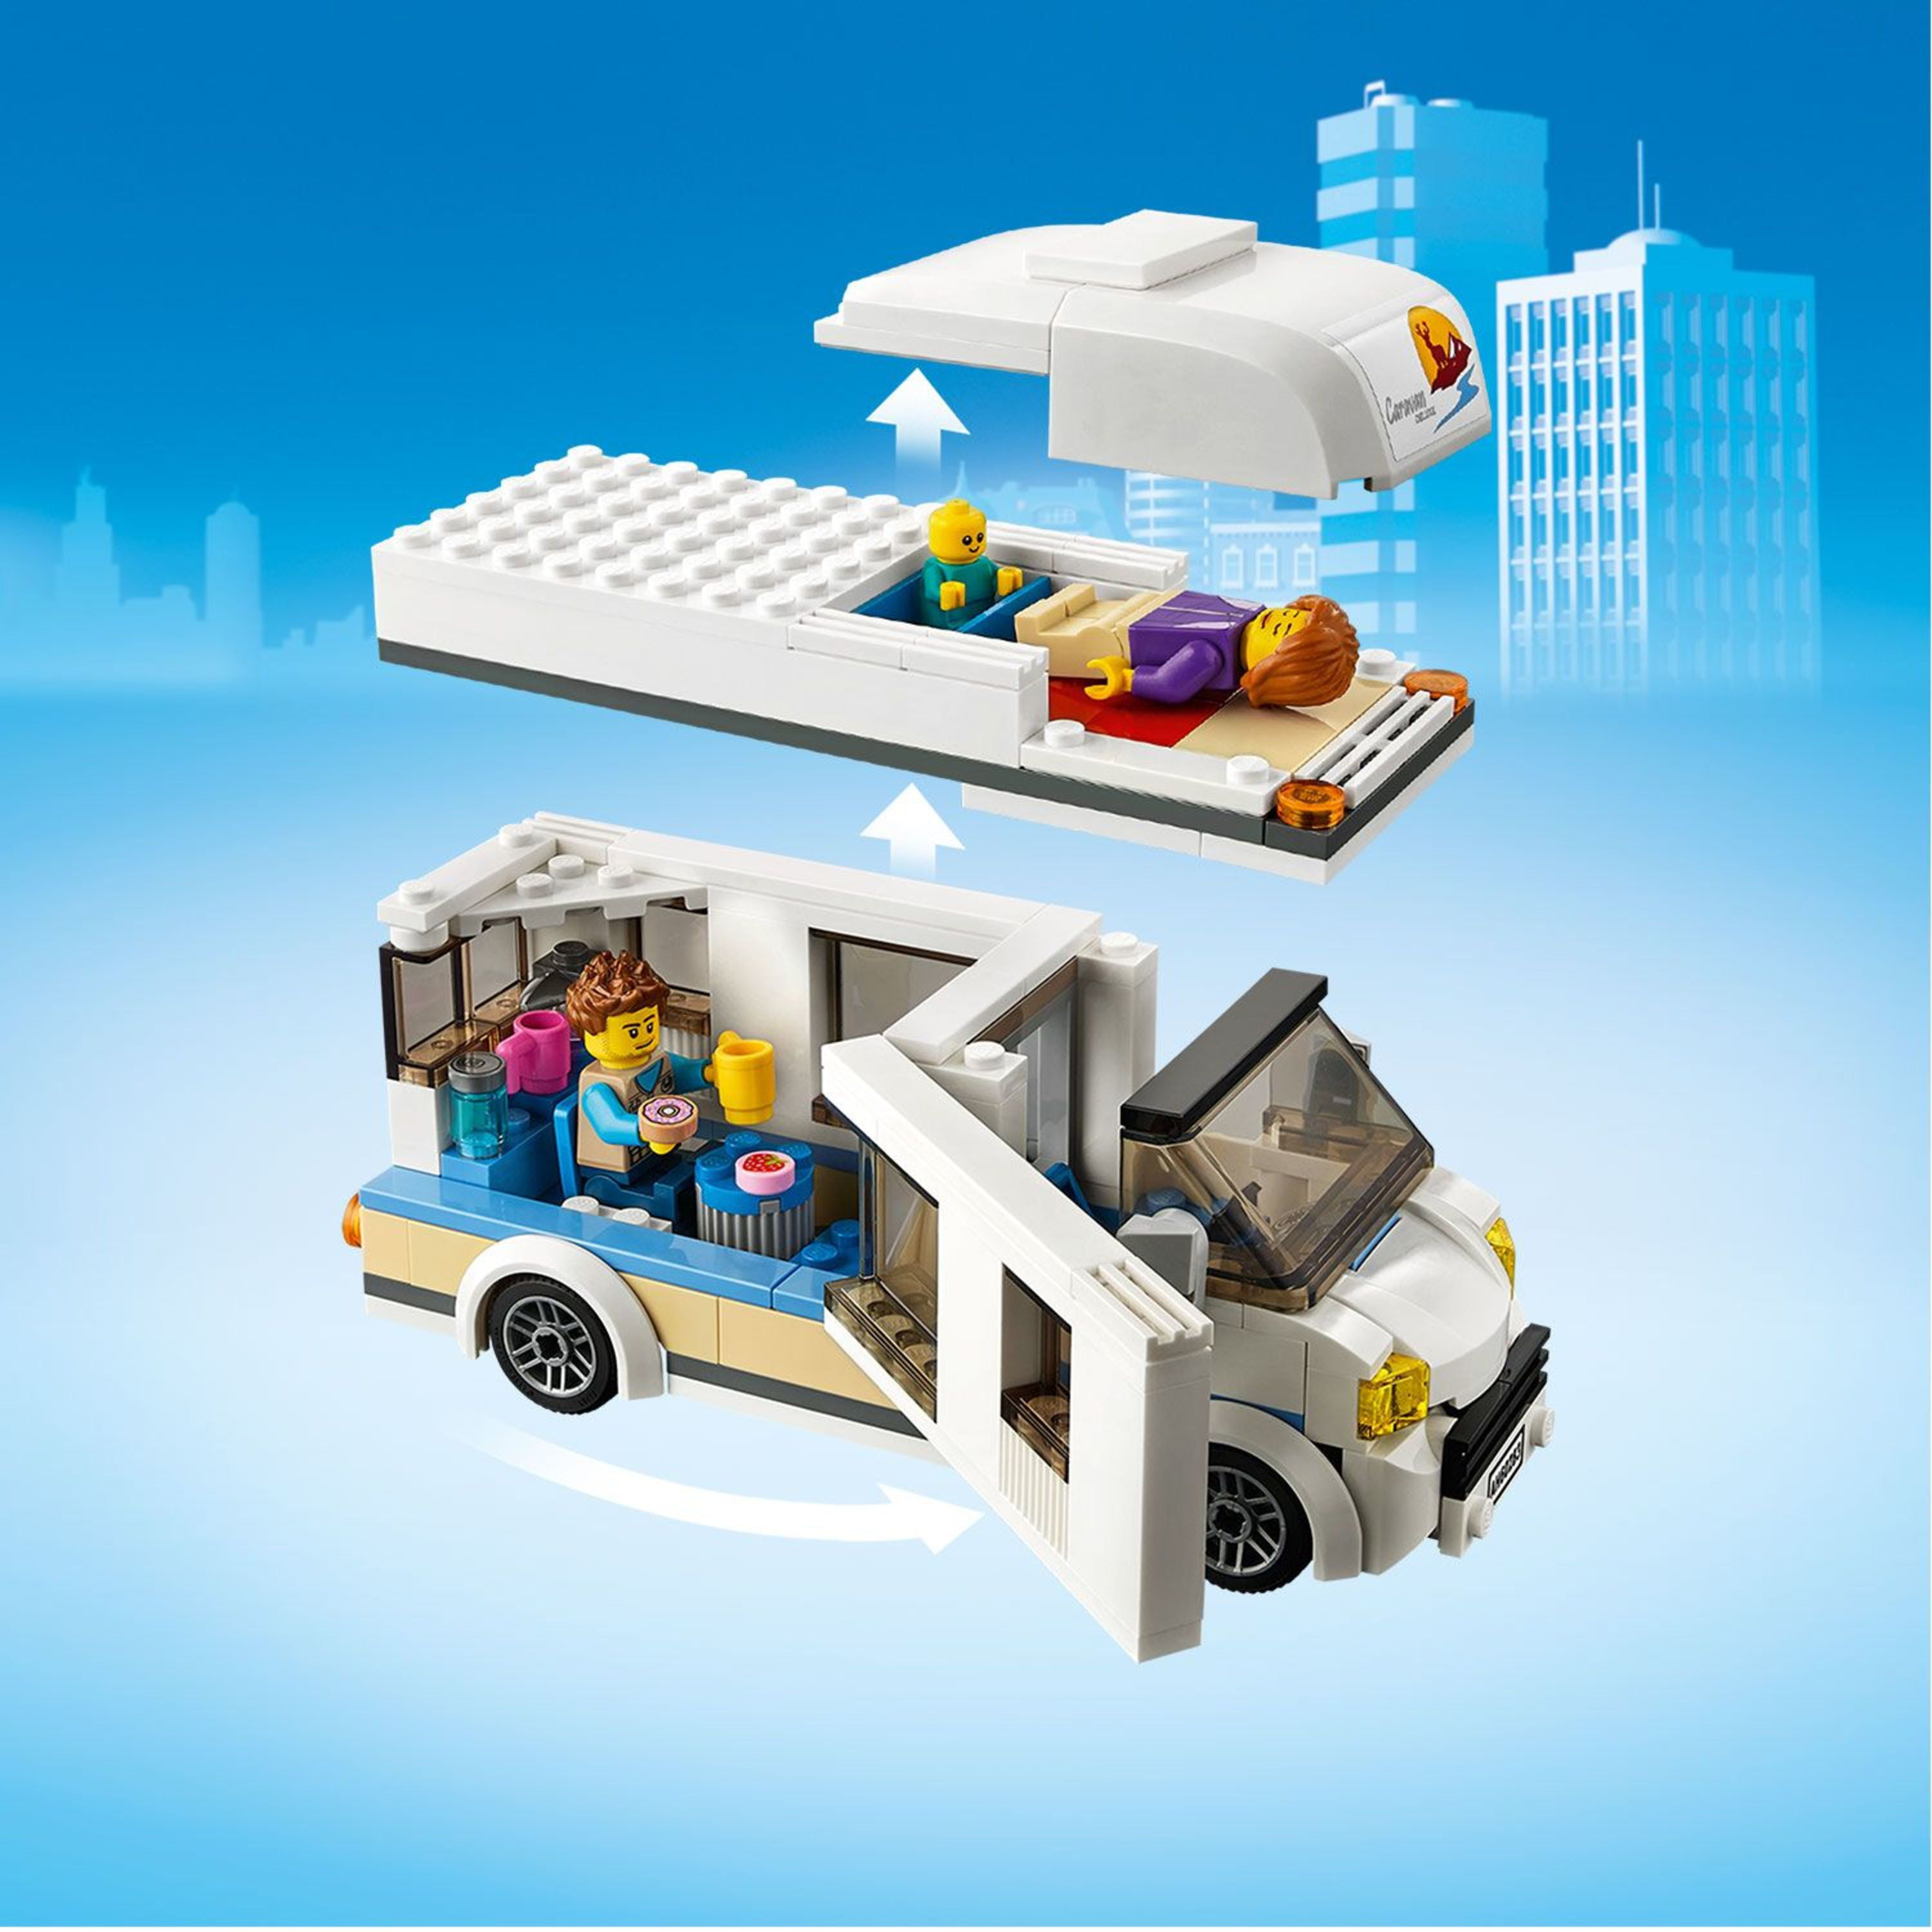 LEGO Holiday Camper Van Toy for Kids